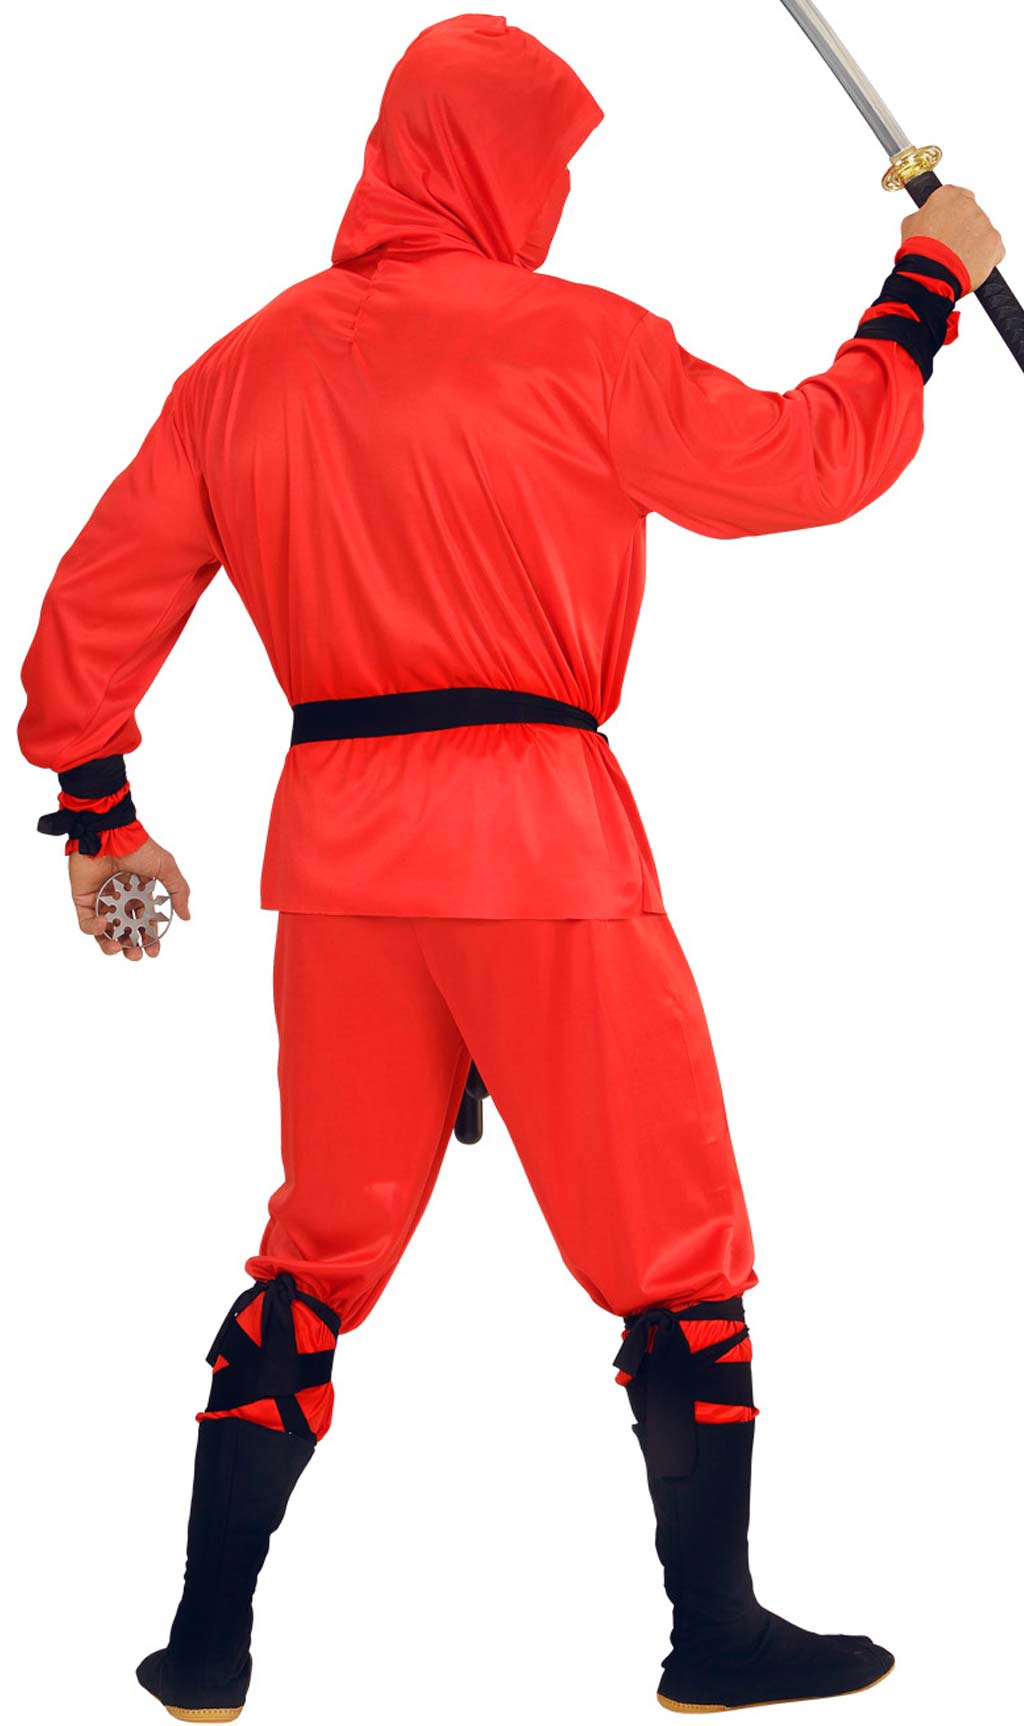 Travestimento guerriero ninja rosso per bimbo